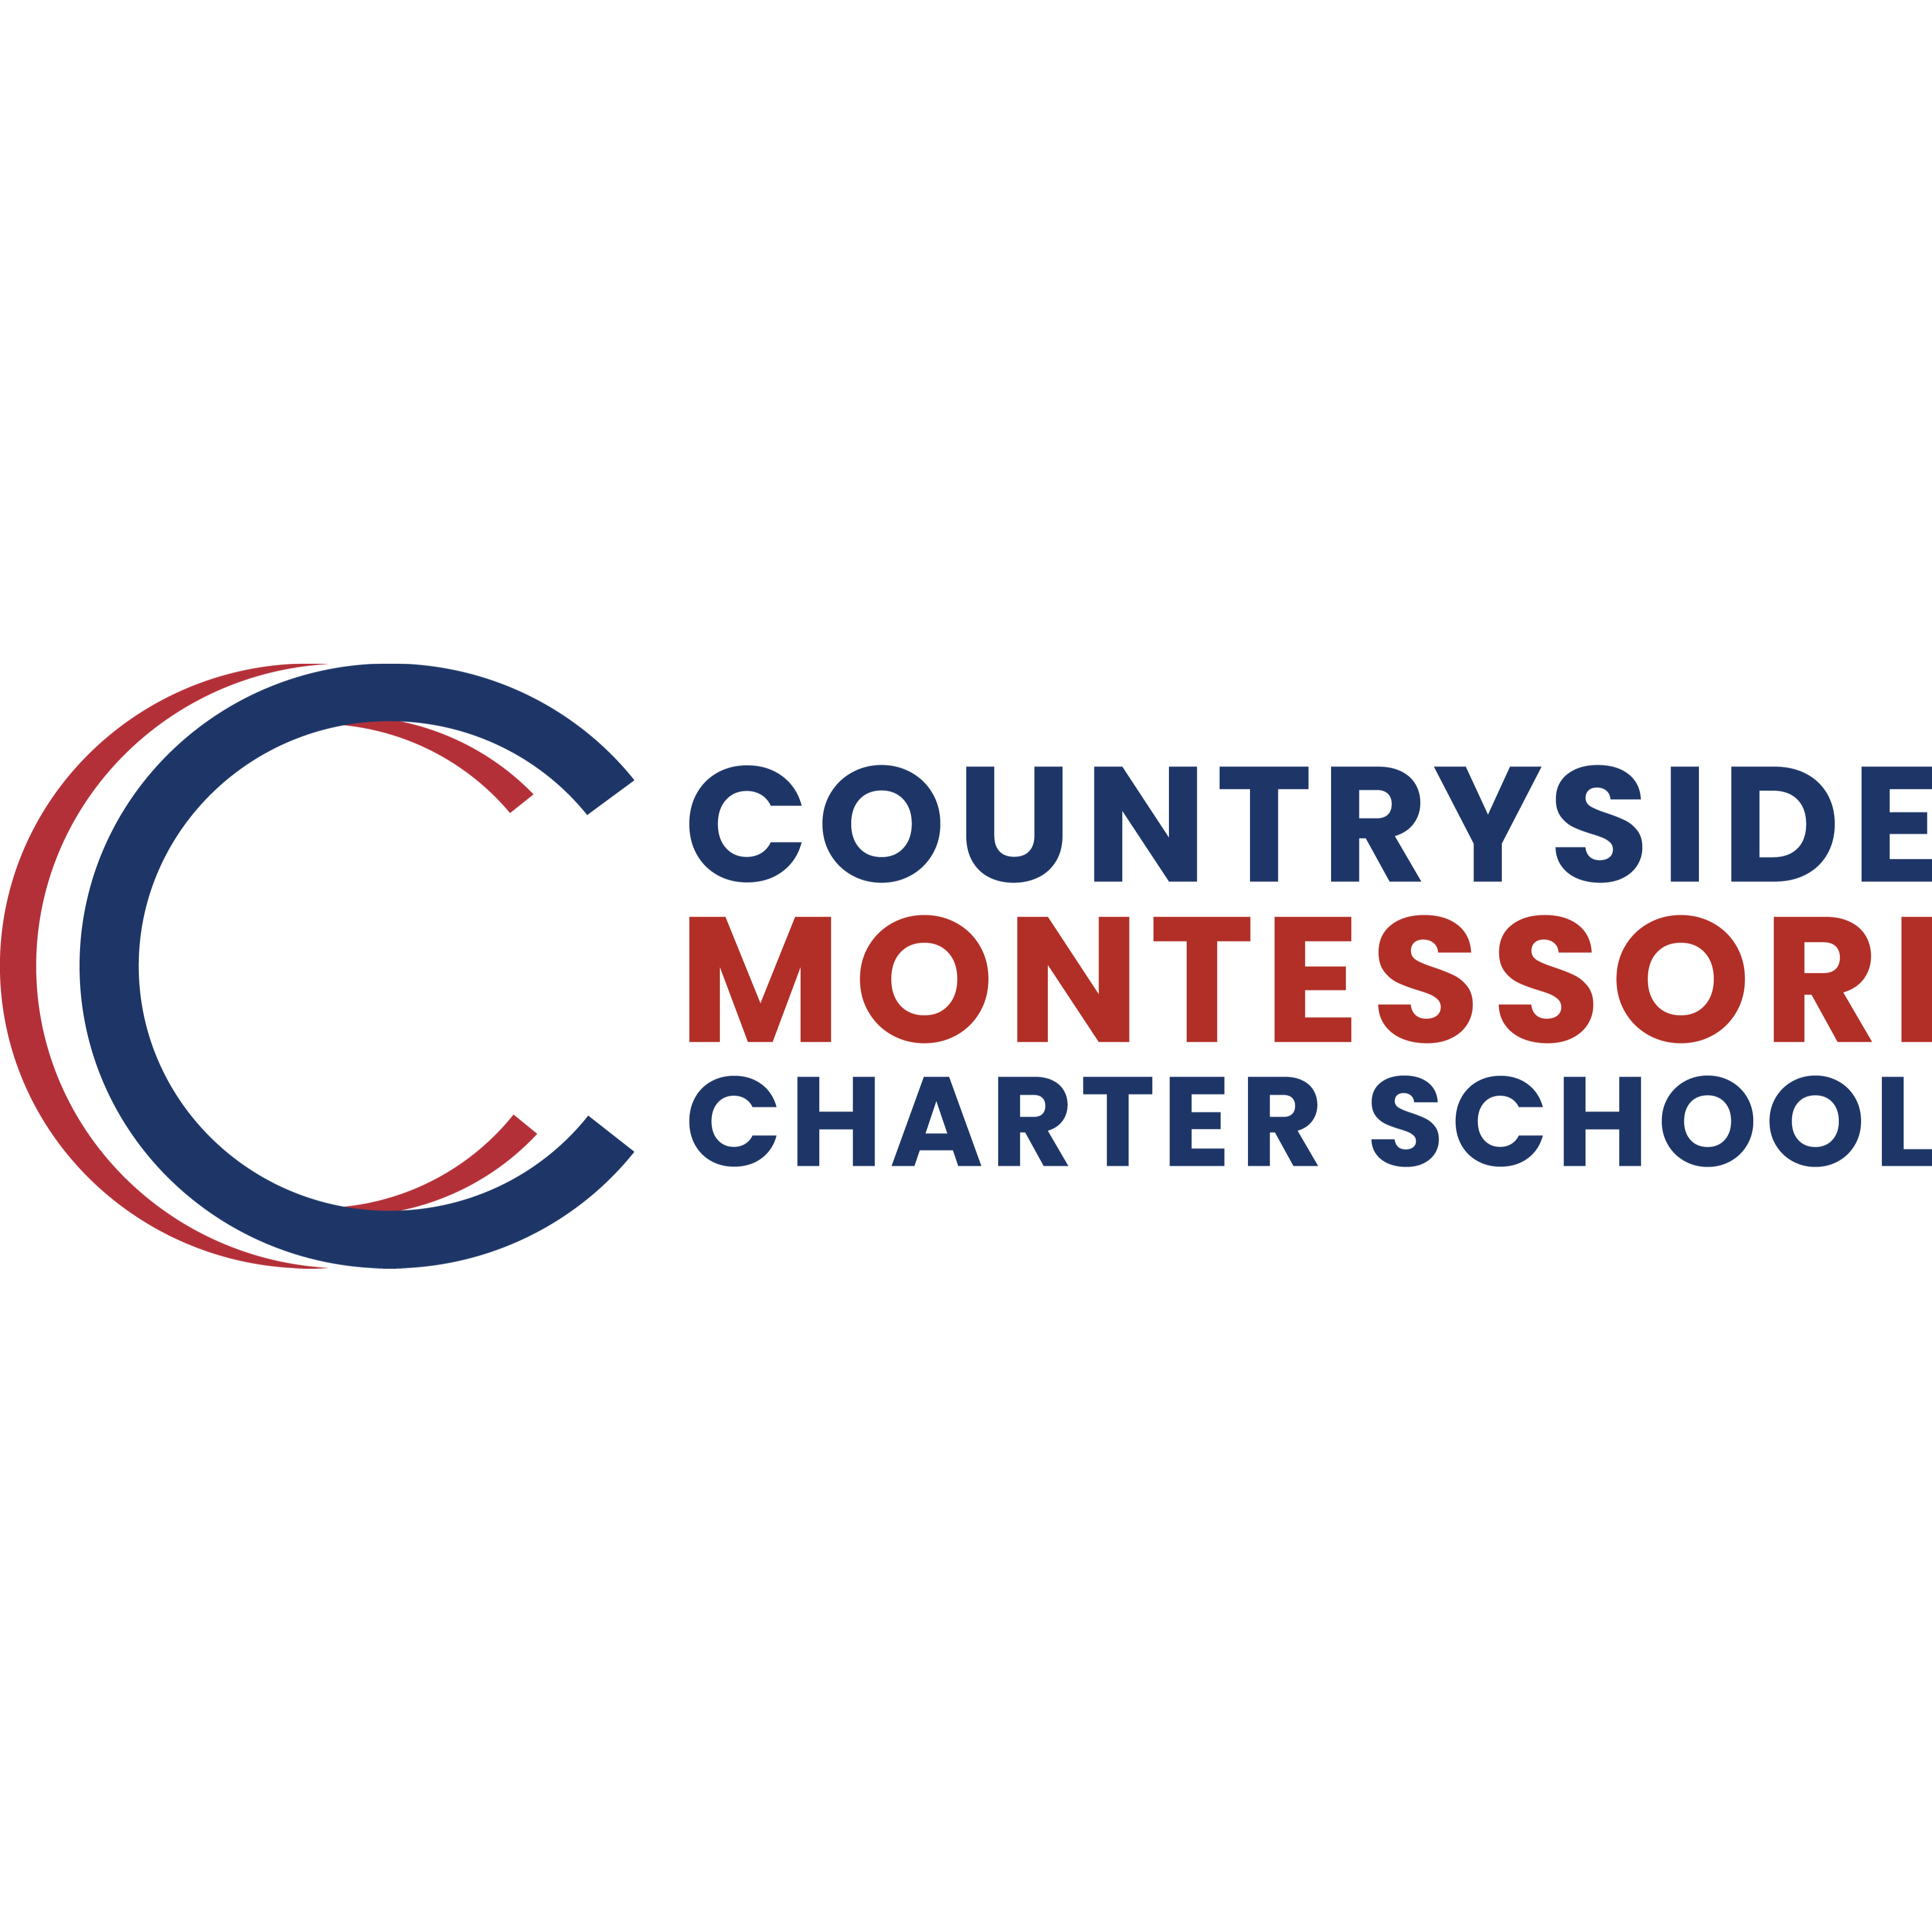 Countryside Montessori Charter School